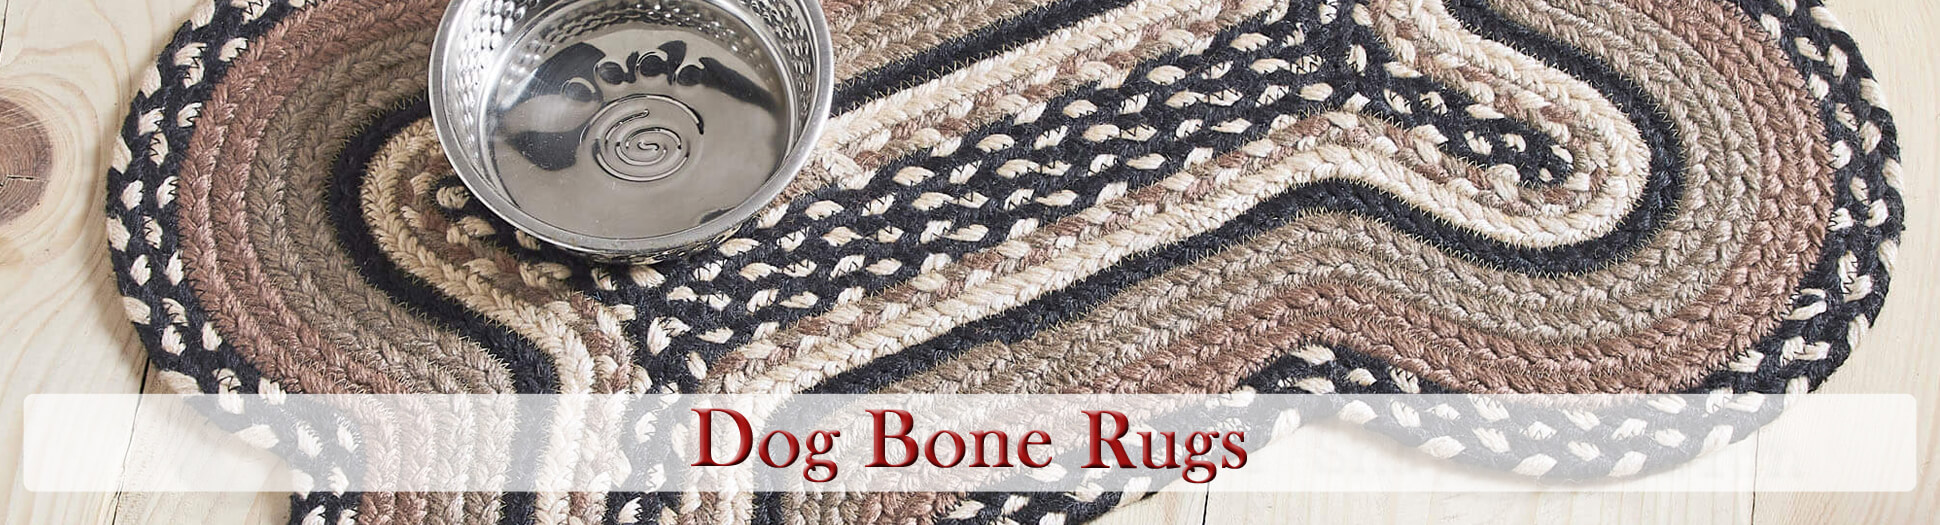 Dog Bone Rugs by VHC Brands